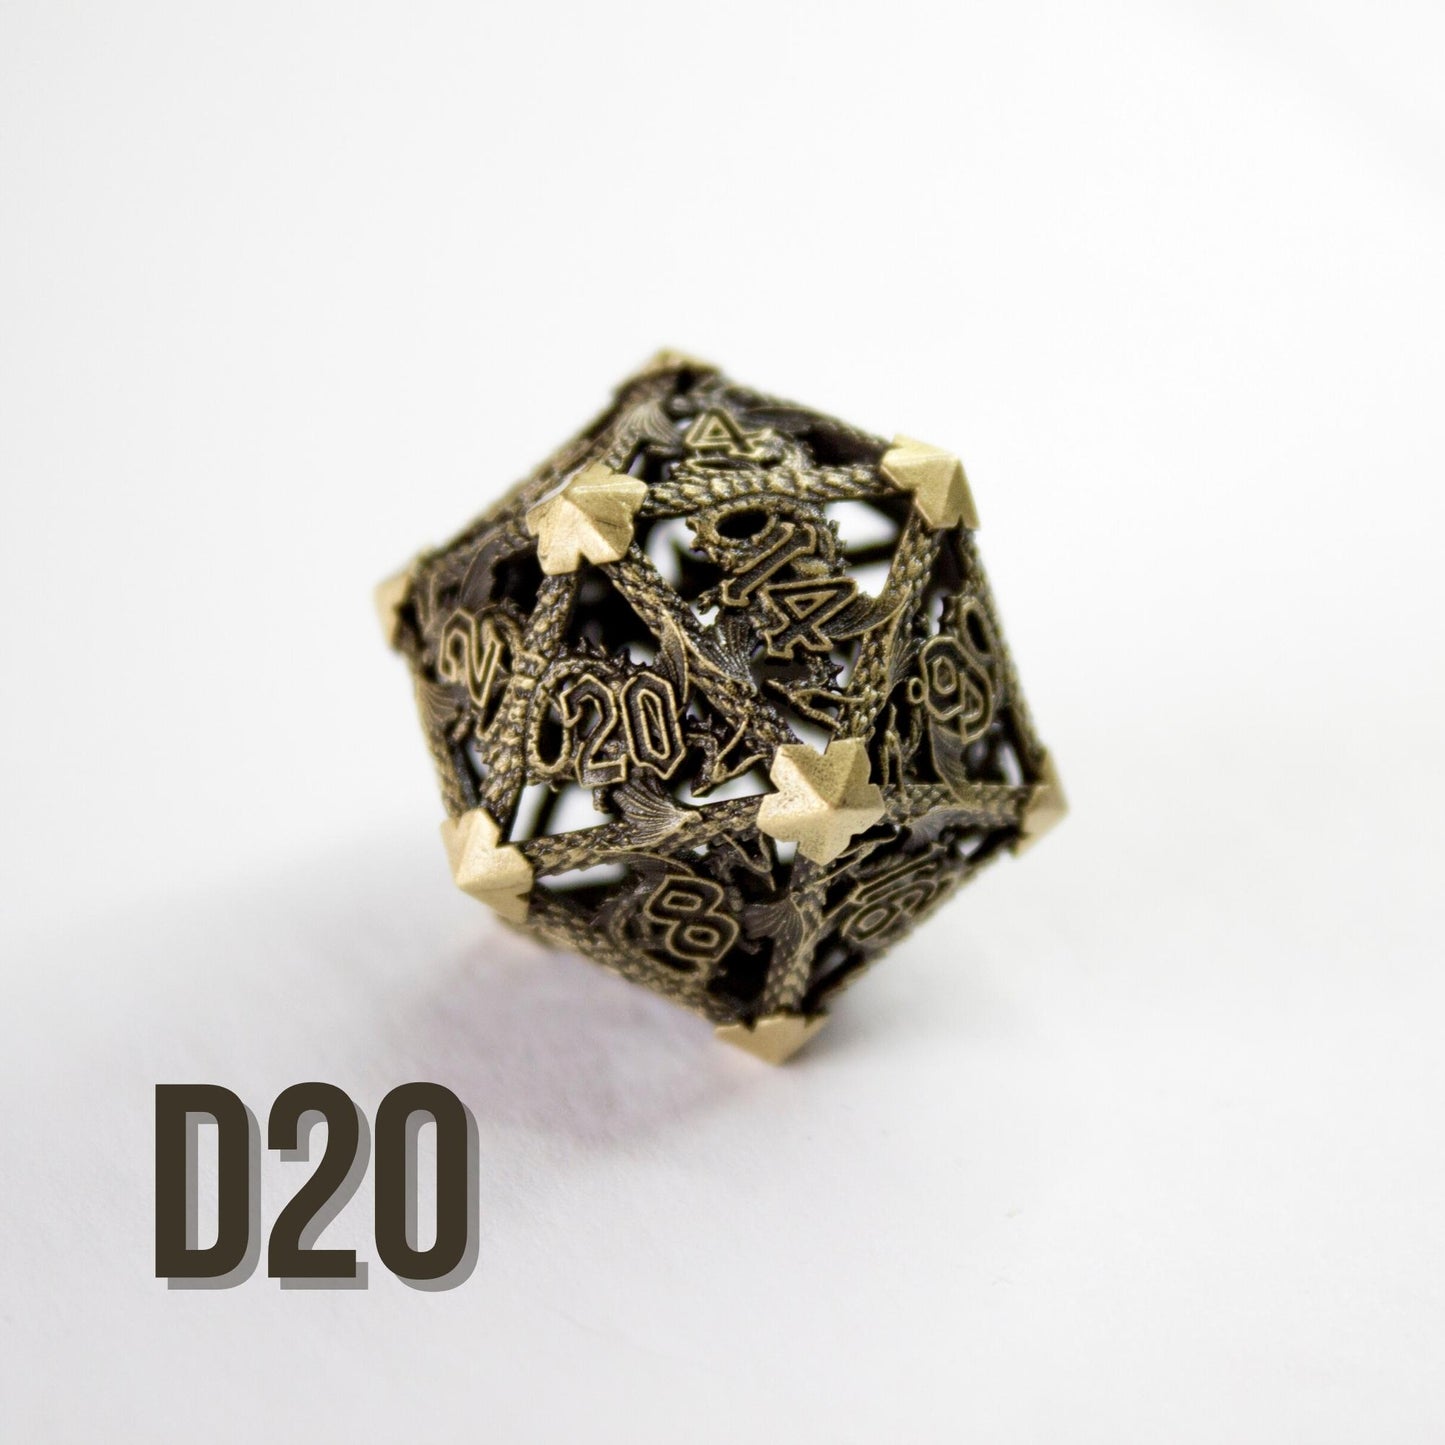 Stone Dragon | Hollow Metal Dice (7pc Set)